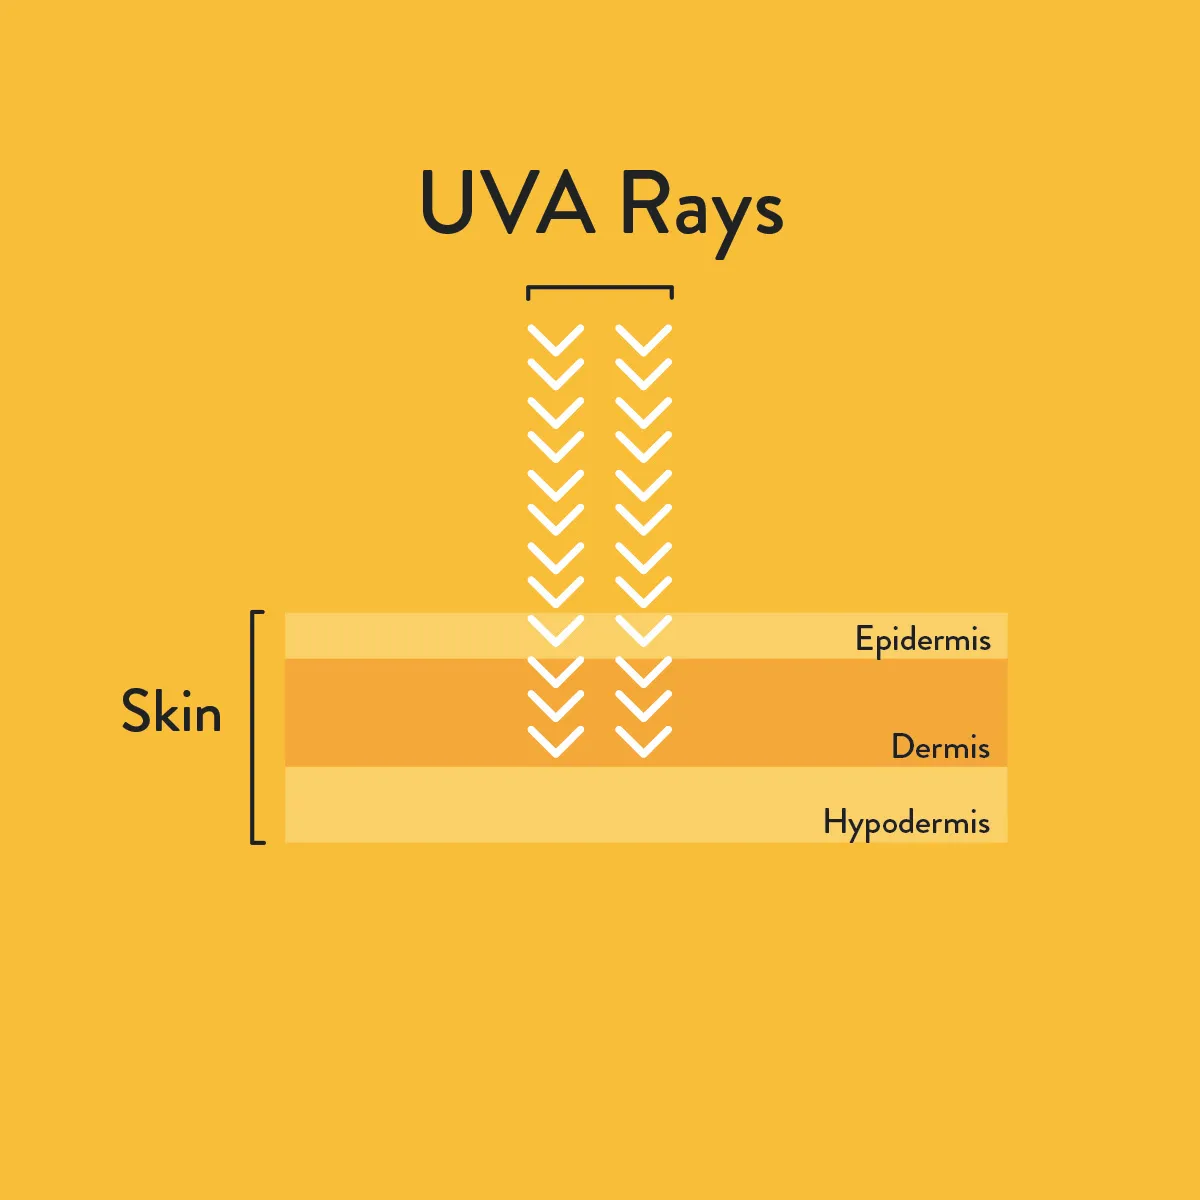 UVA  informative diagram